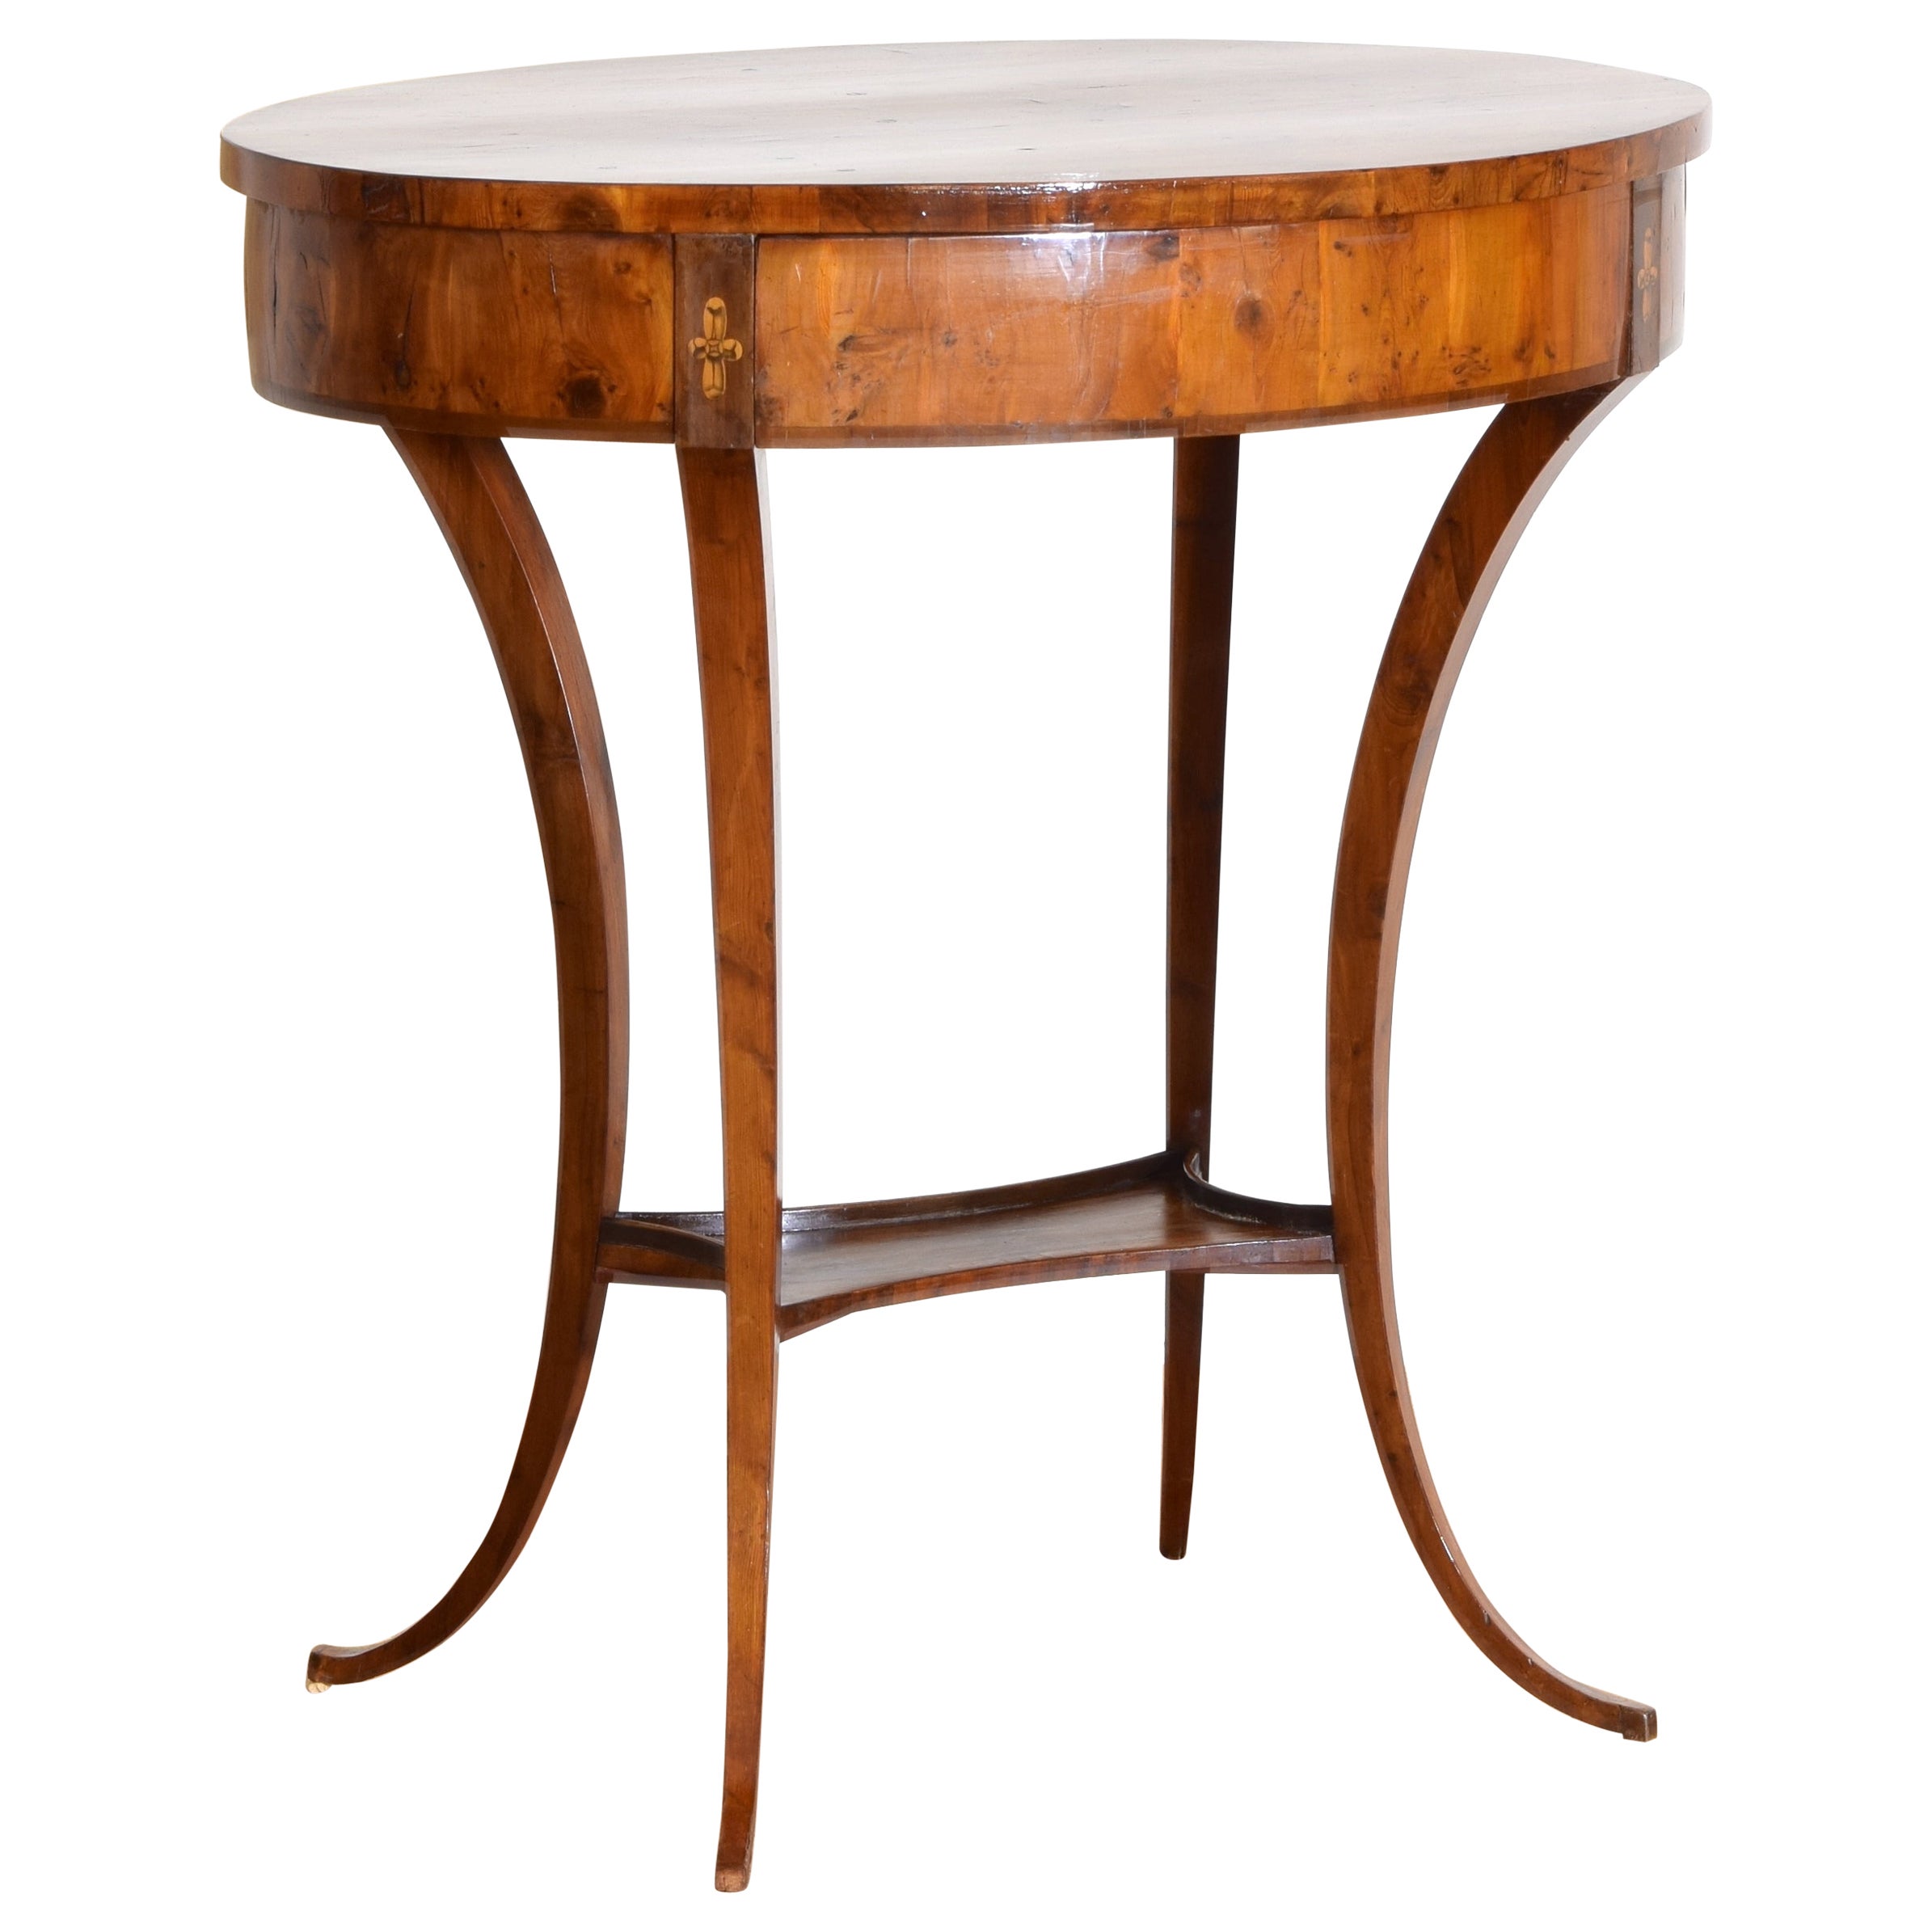 Austrian Late Neoclassic Shaped Burl Walnut Oval 1-Drawer Side Table, circa 1830